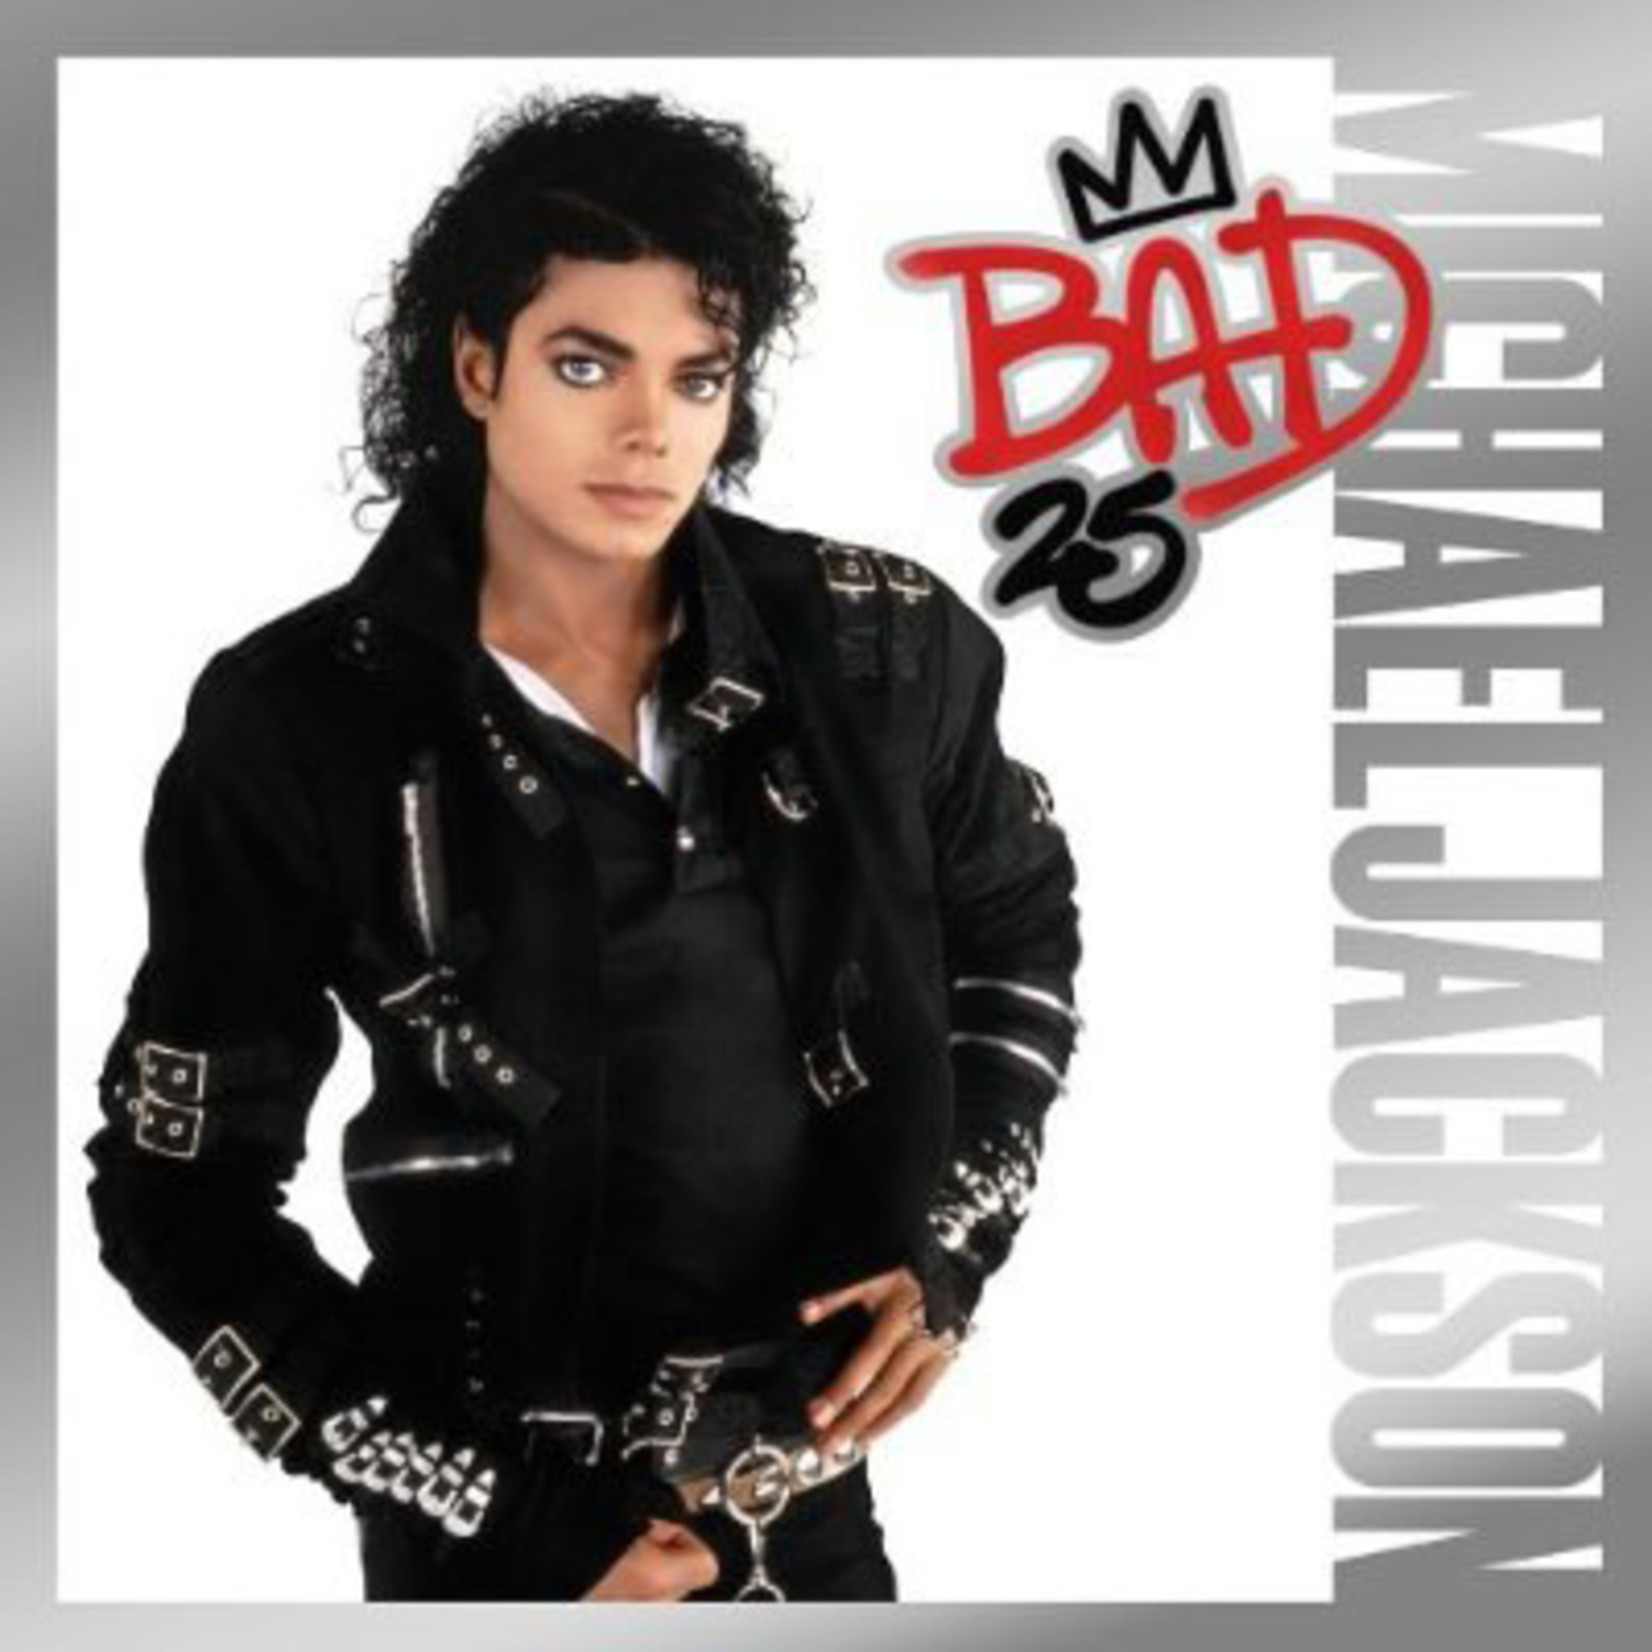 [New] Michael Jackson - Bad (3LP, 25th Anniversary Edition)